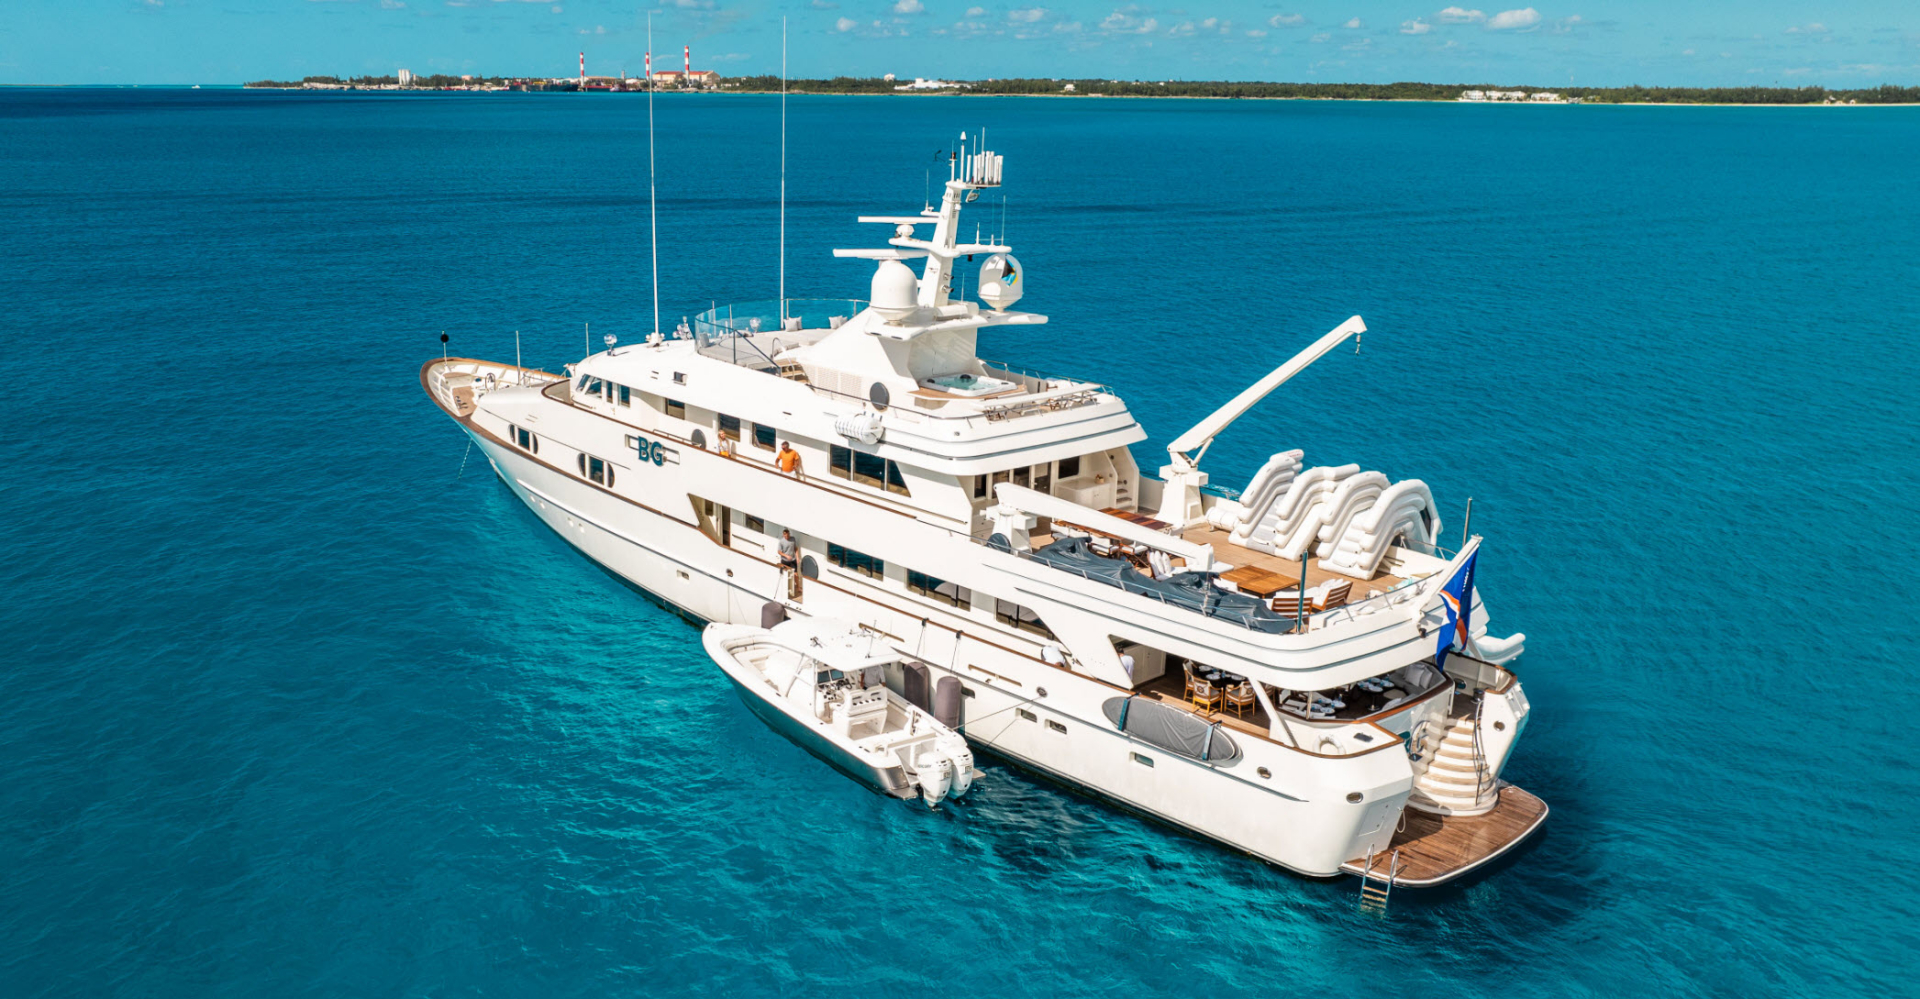 bg charade feadship 157 superyacht for sale